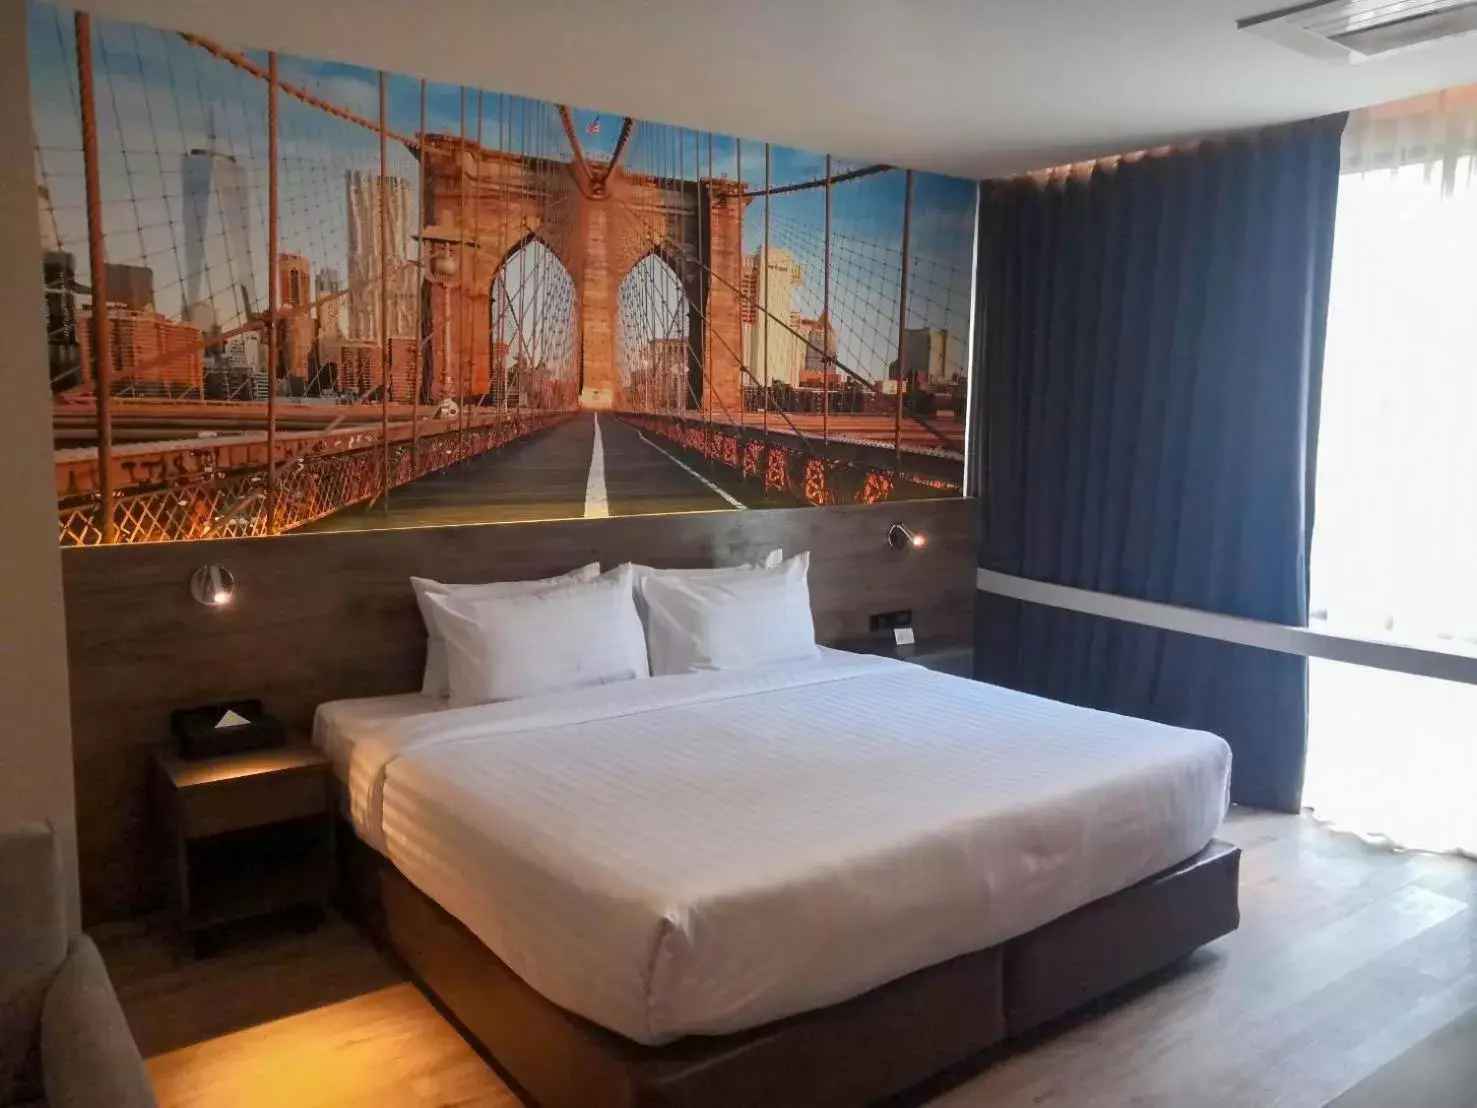 Bed in Manhattan Hotel Bangkok